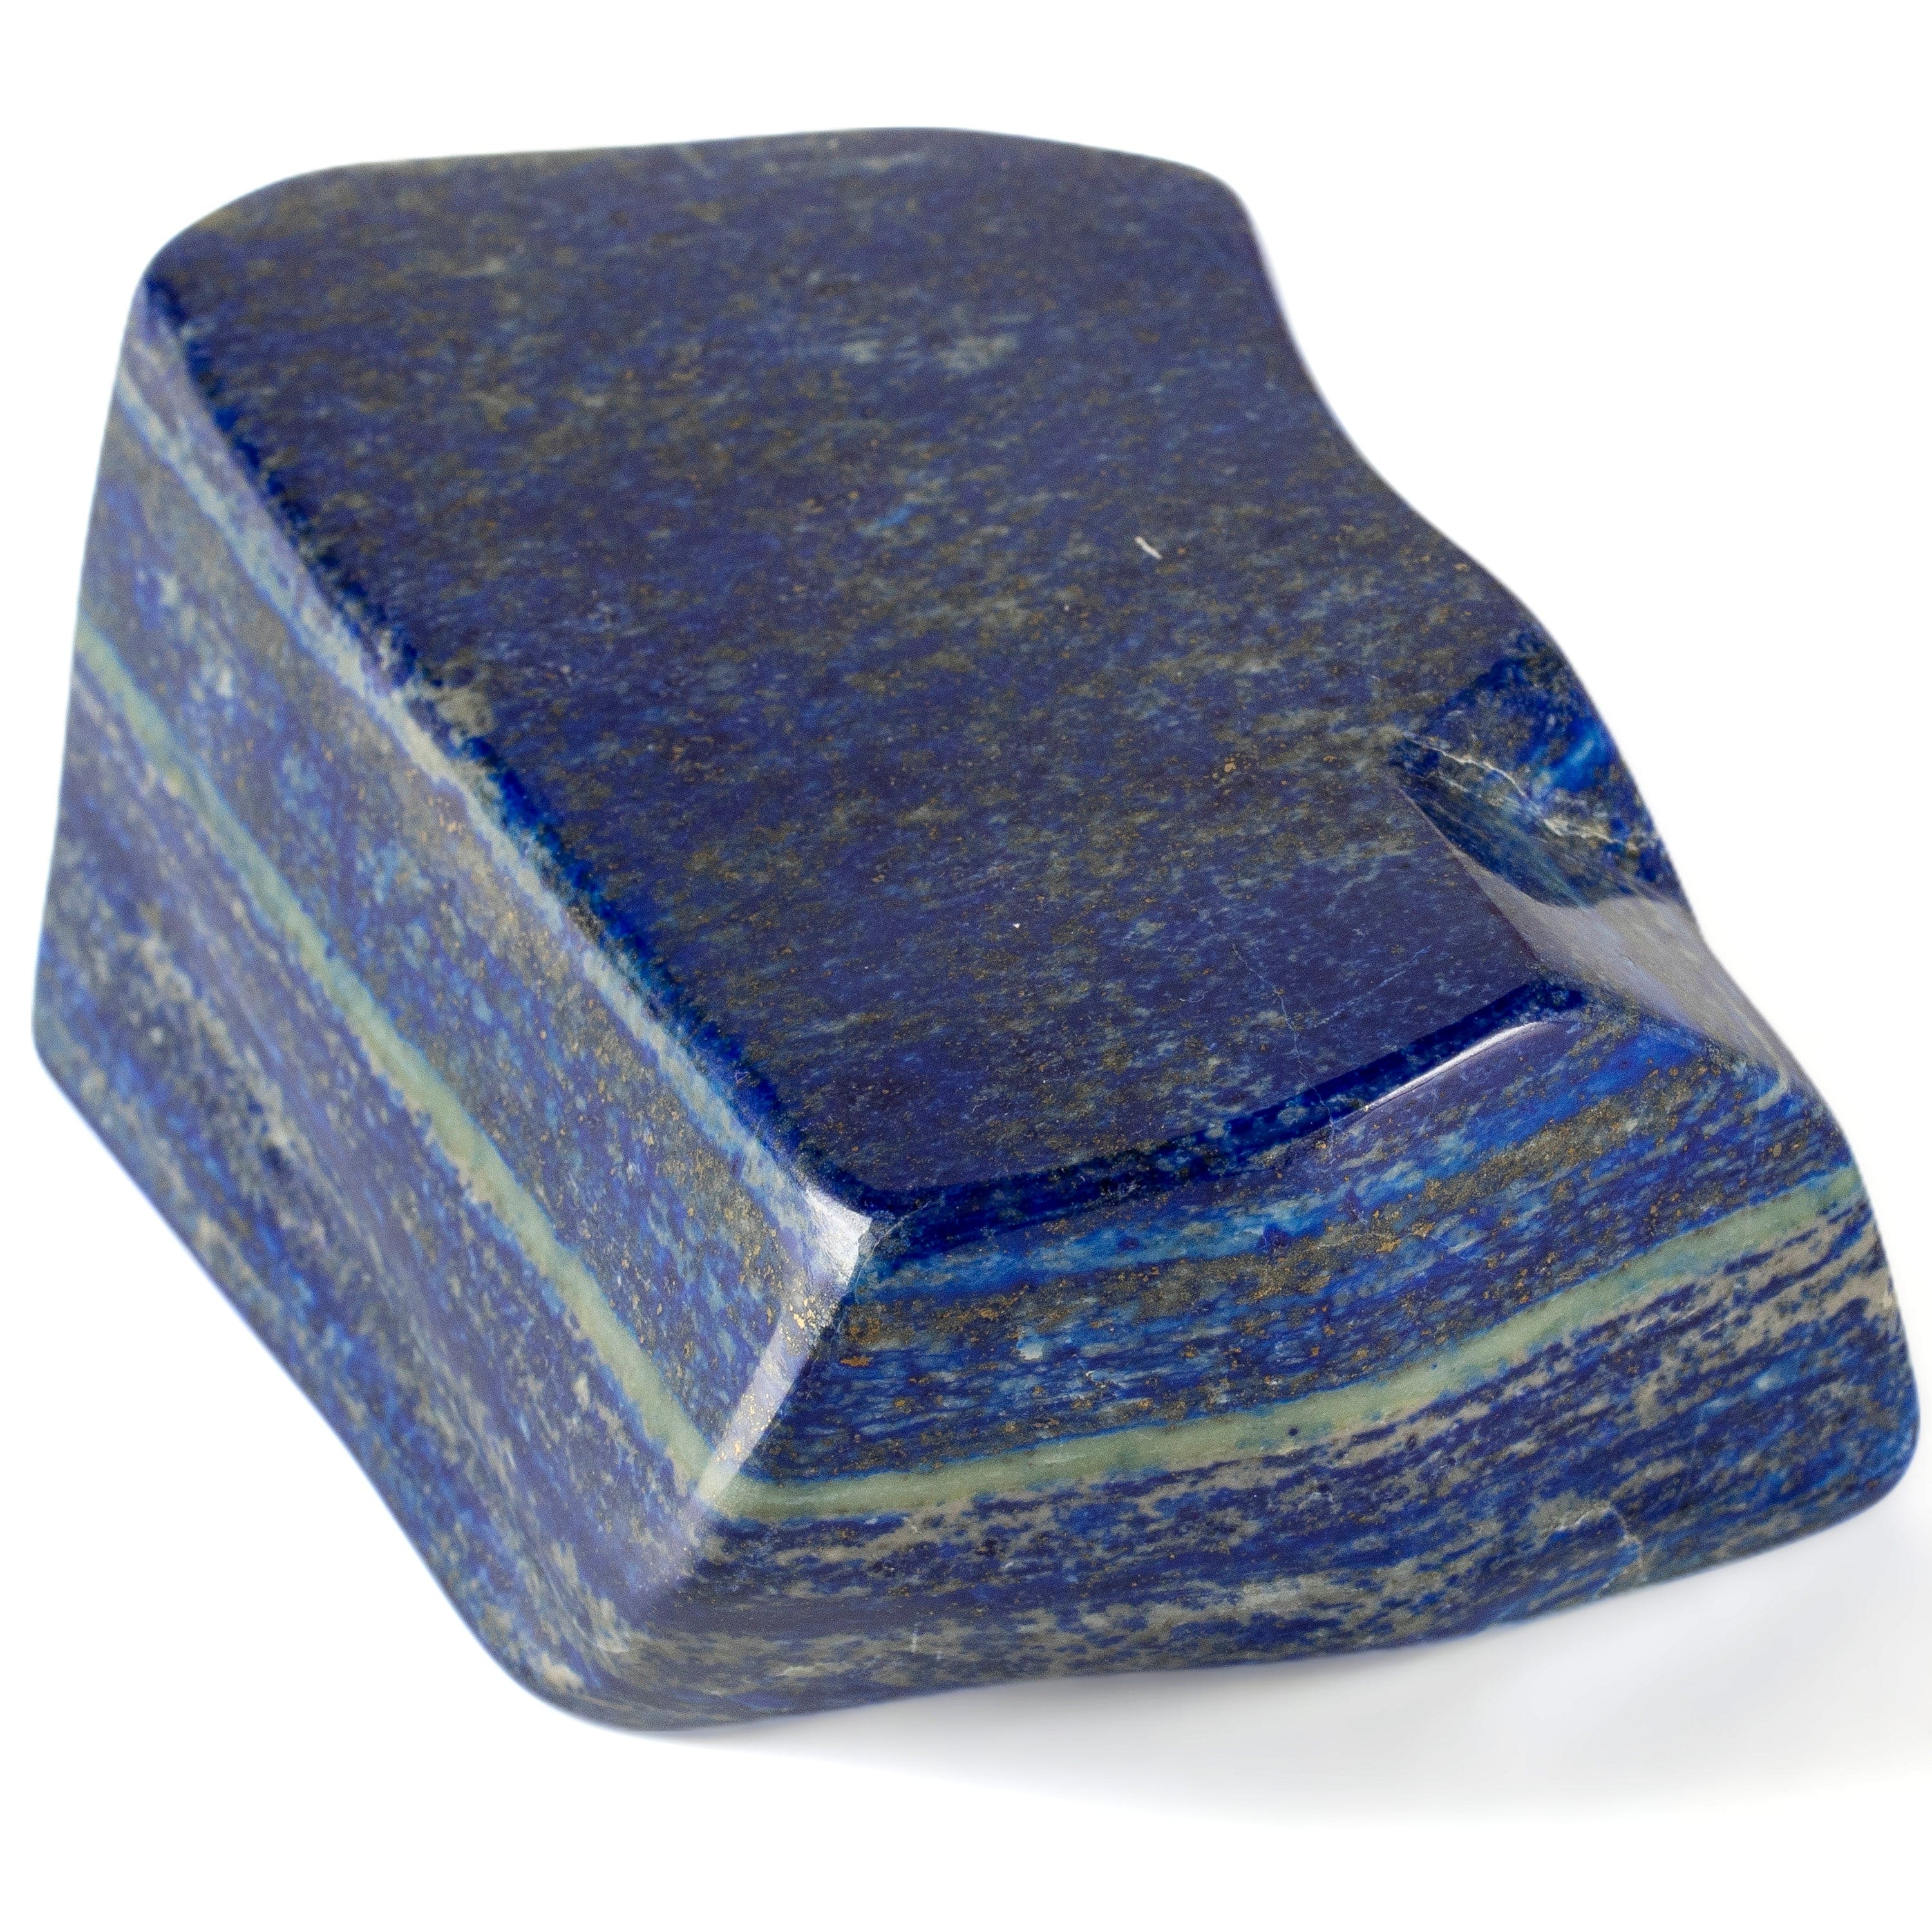 Kalifano Lapis Lapis Lazuli Freeform from Afghanistan - 5.5" / 1,390 grams LP1400.005